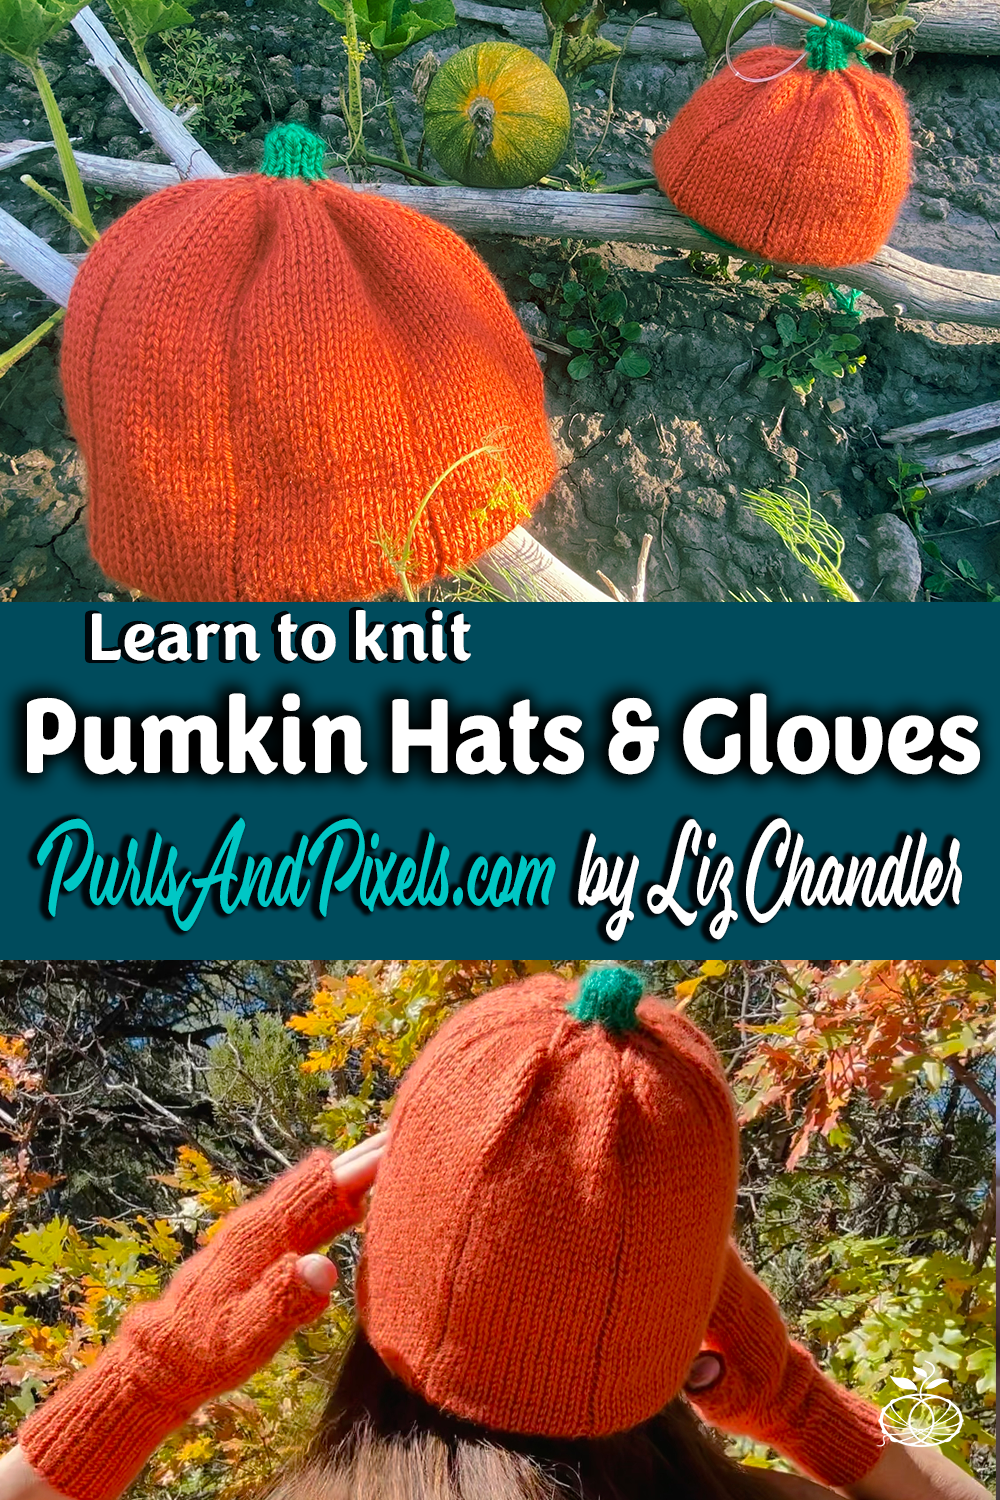 Pumpkin hat and gloves knitting pattern set by Liz Chandler @PurlsAndPixels.